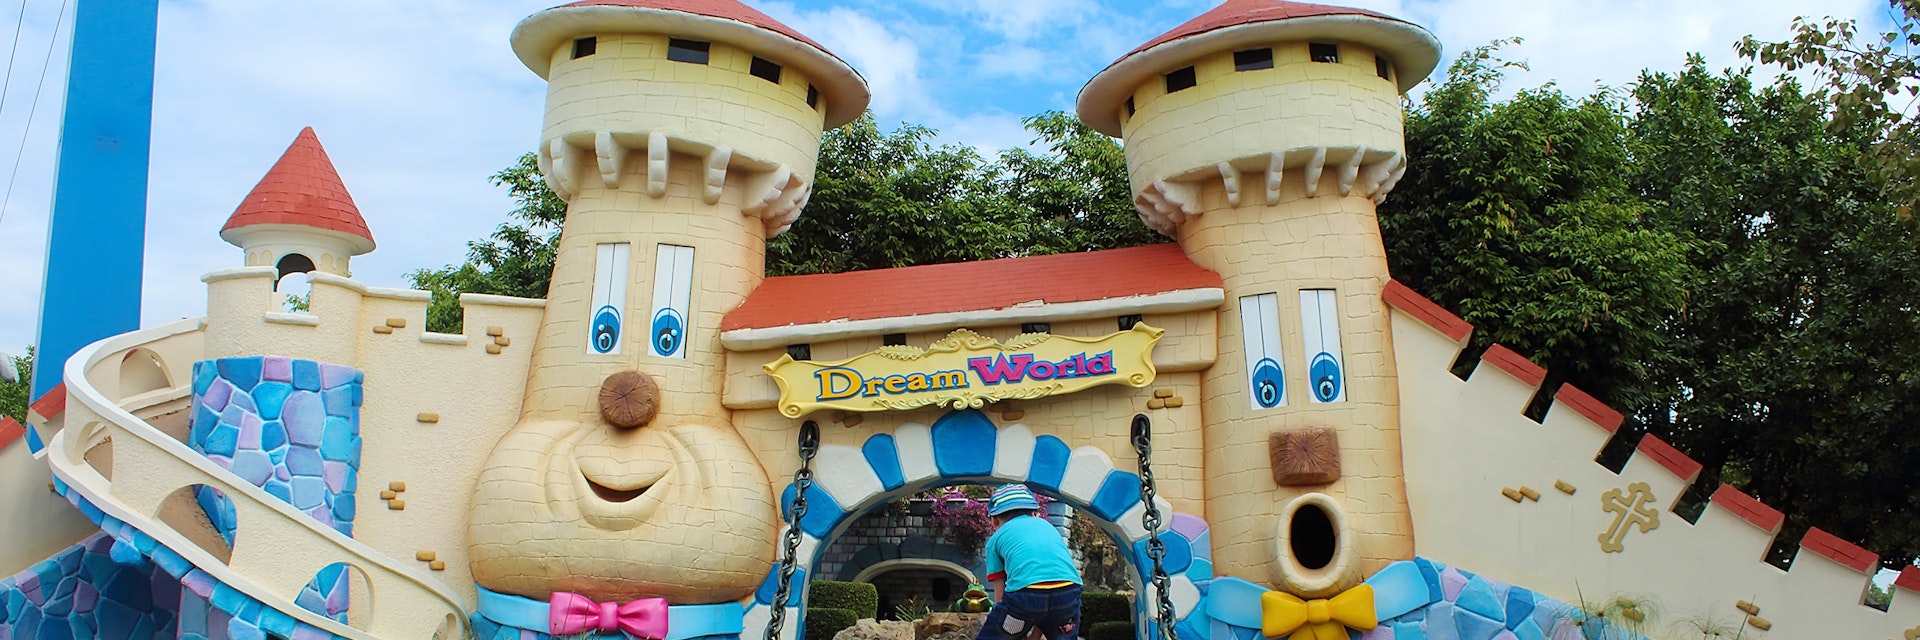 Bangkok Dream World Amusement Park